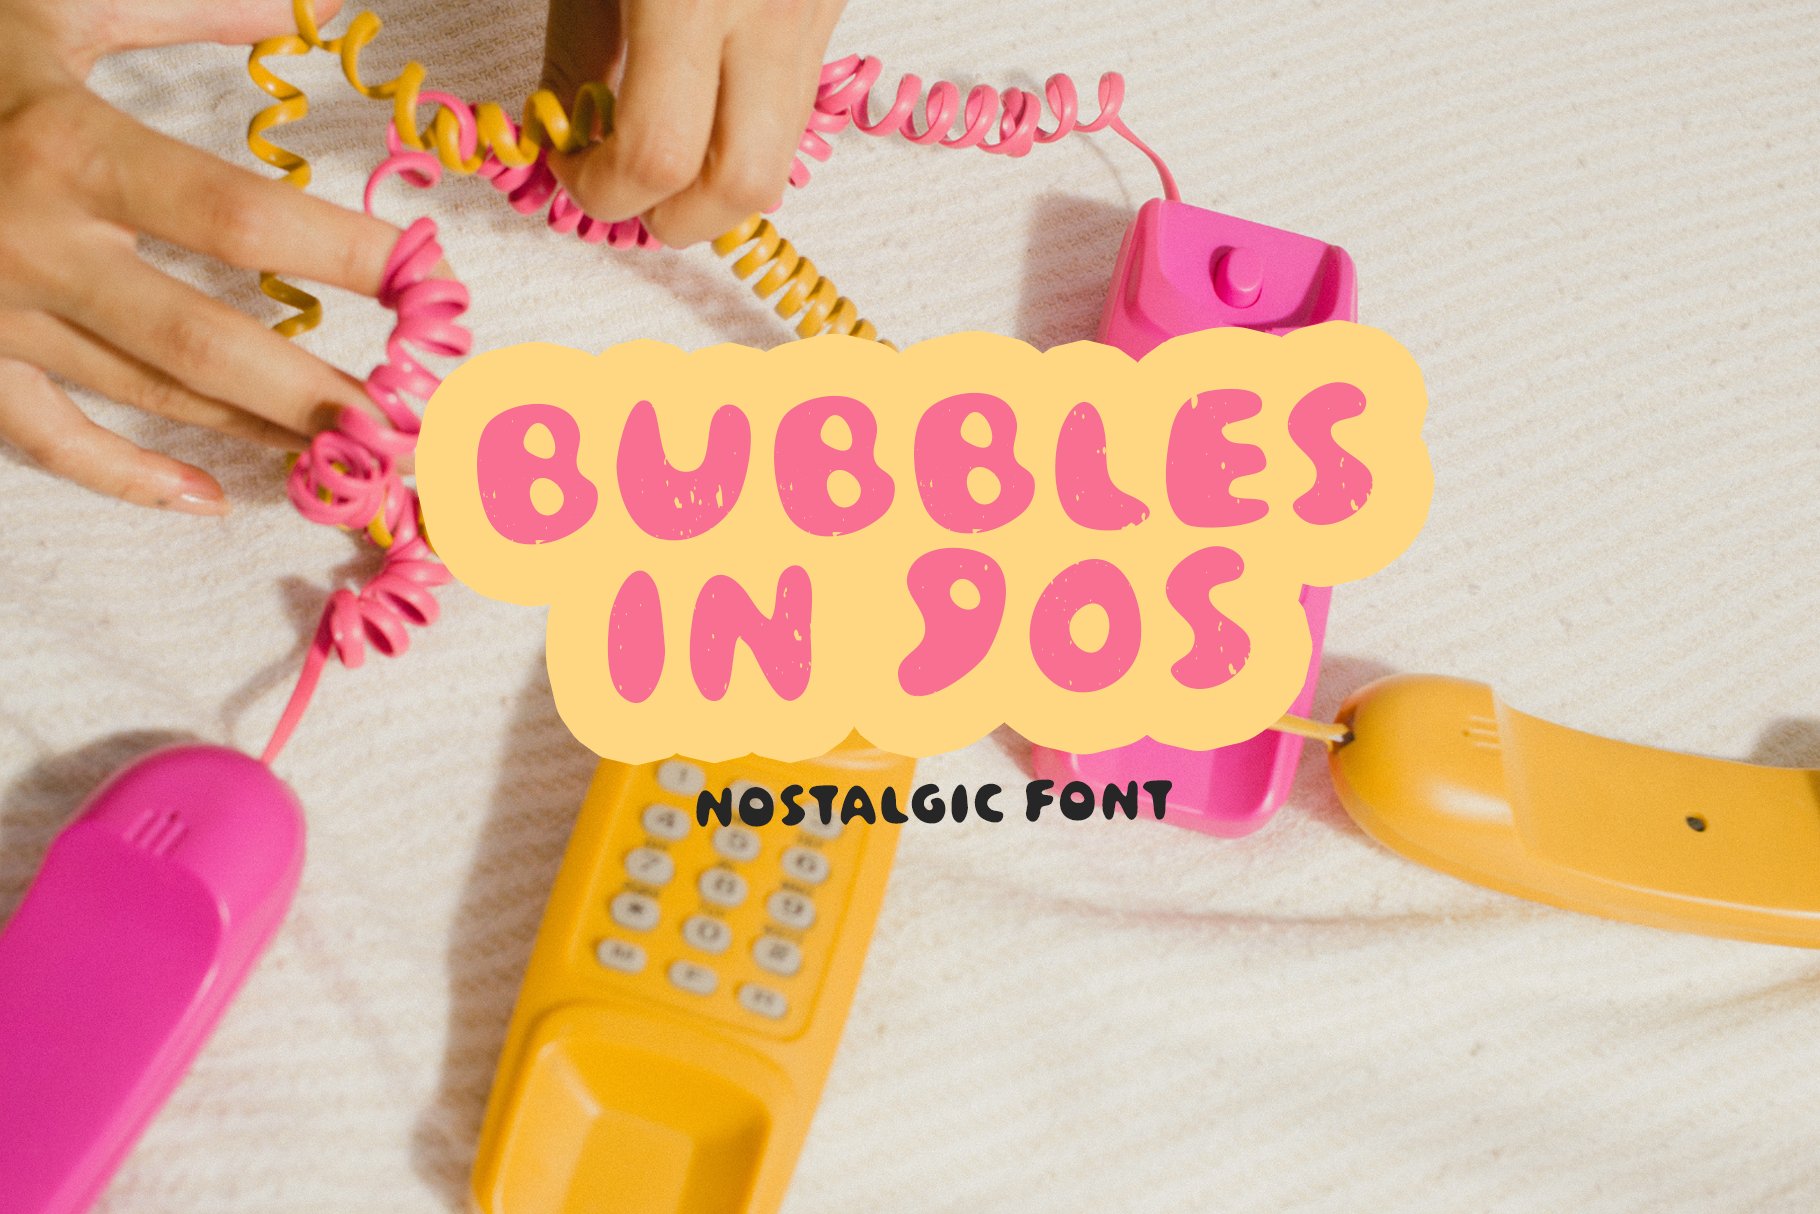 90s Nostalgic Font - Bubbles in 90scover image.